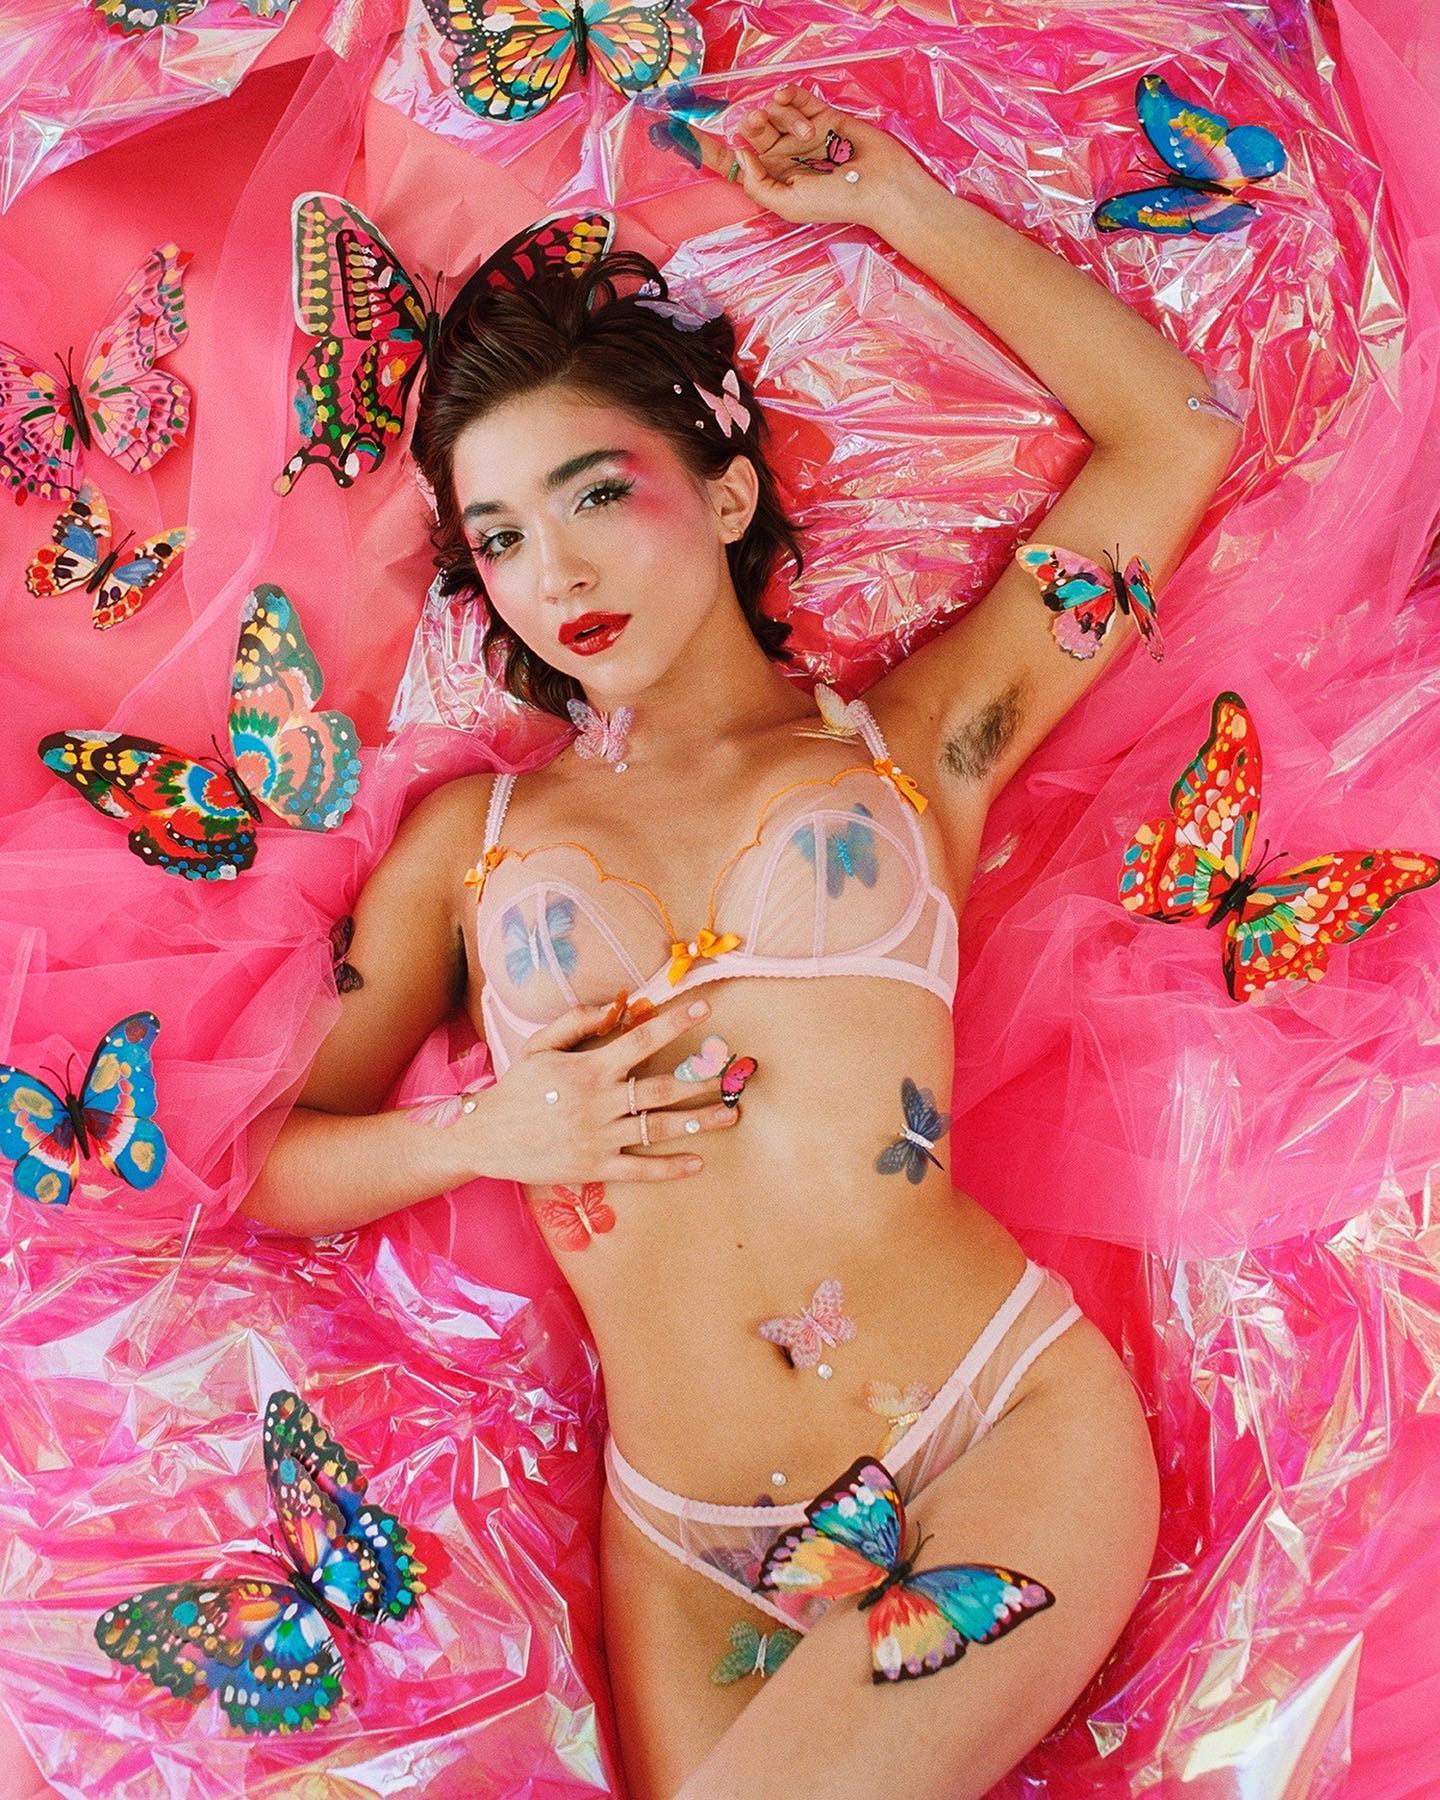 Rowan Blanchard Butterfly Girl.